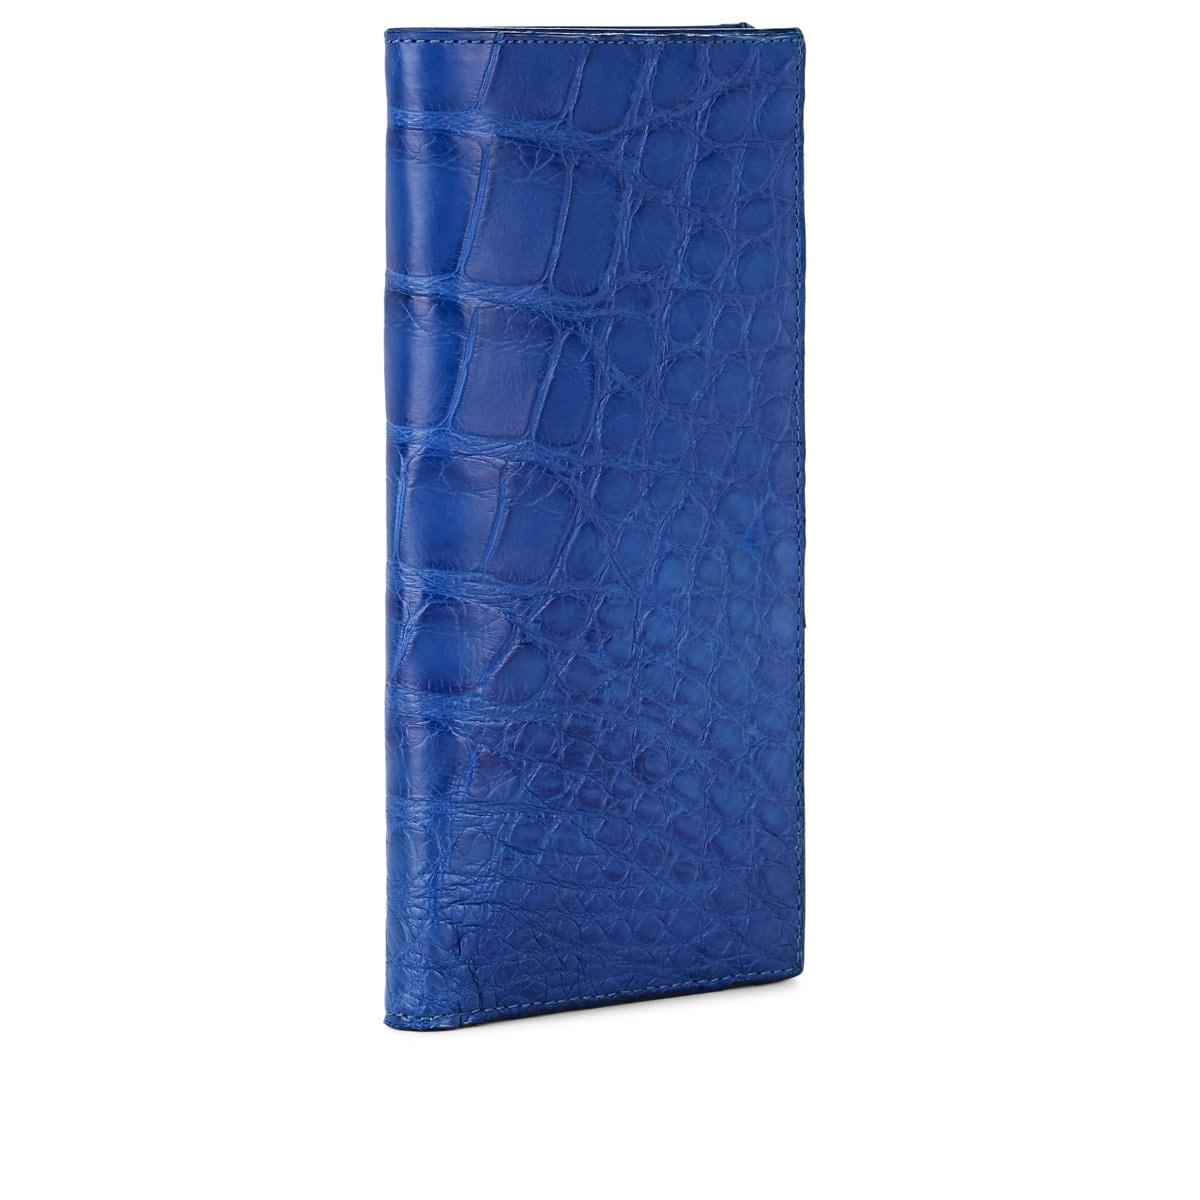 Barneys New York Leather Long Alligator Folding Wallet in Blue for Men - Lyst